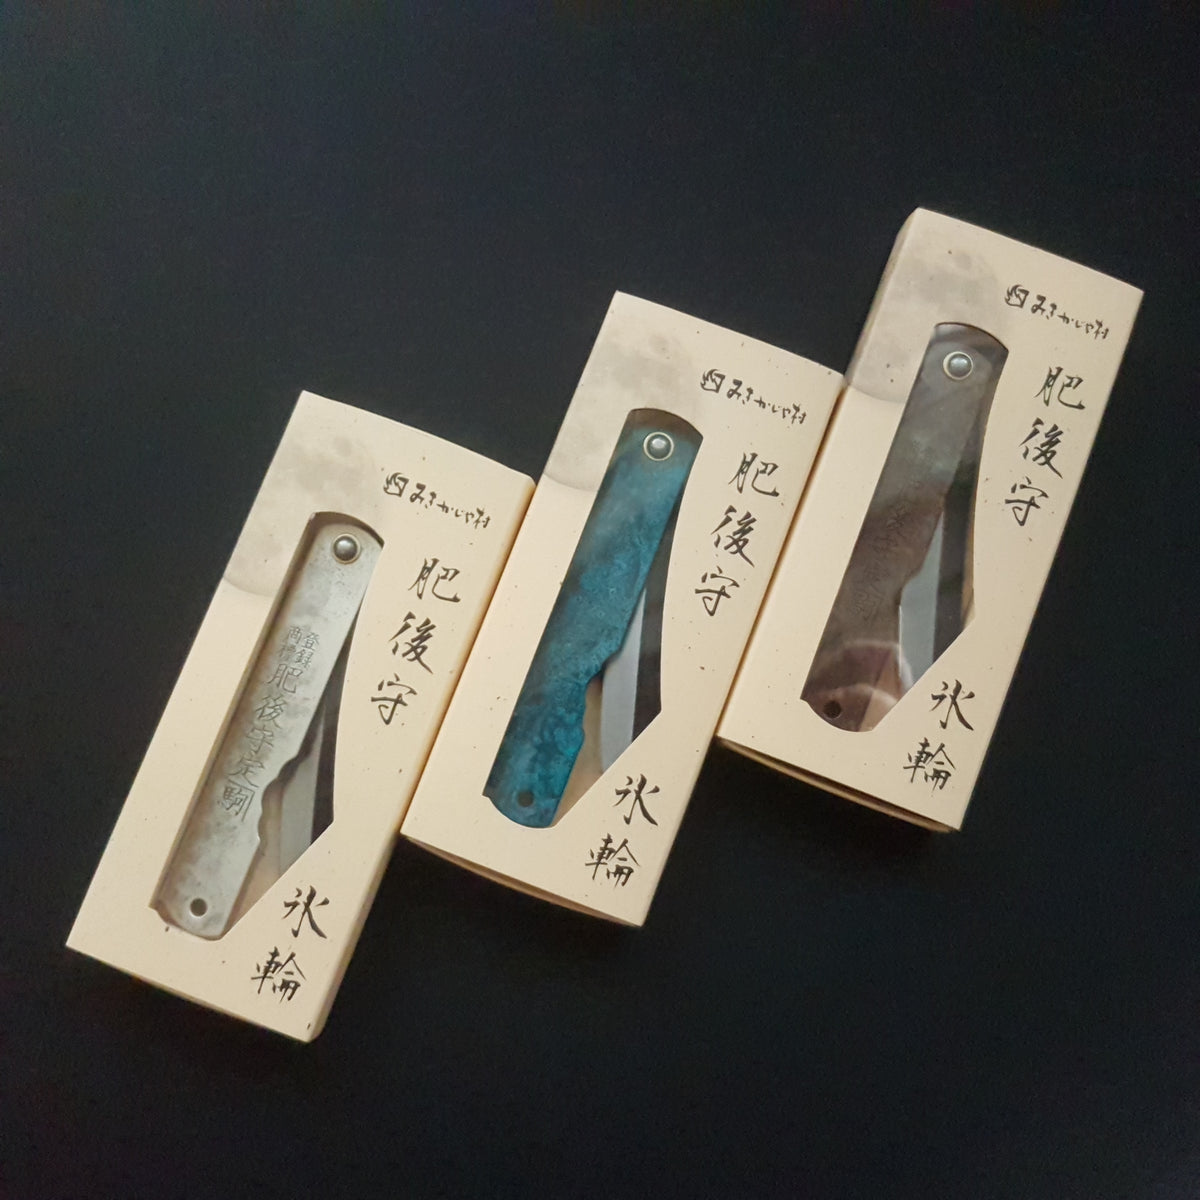 Higonokami Folding Knife - Aogami, Large – JINEN